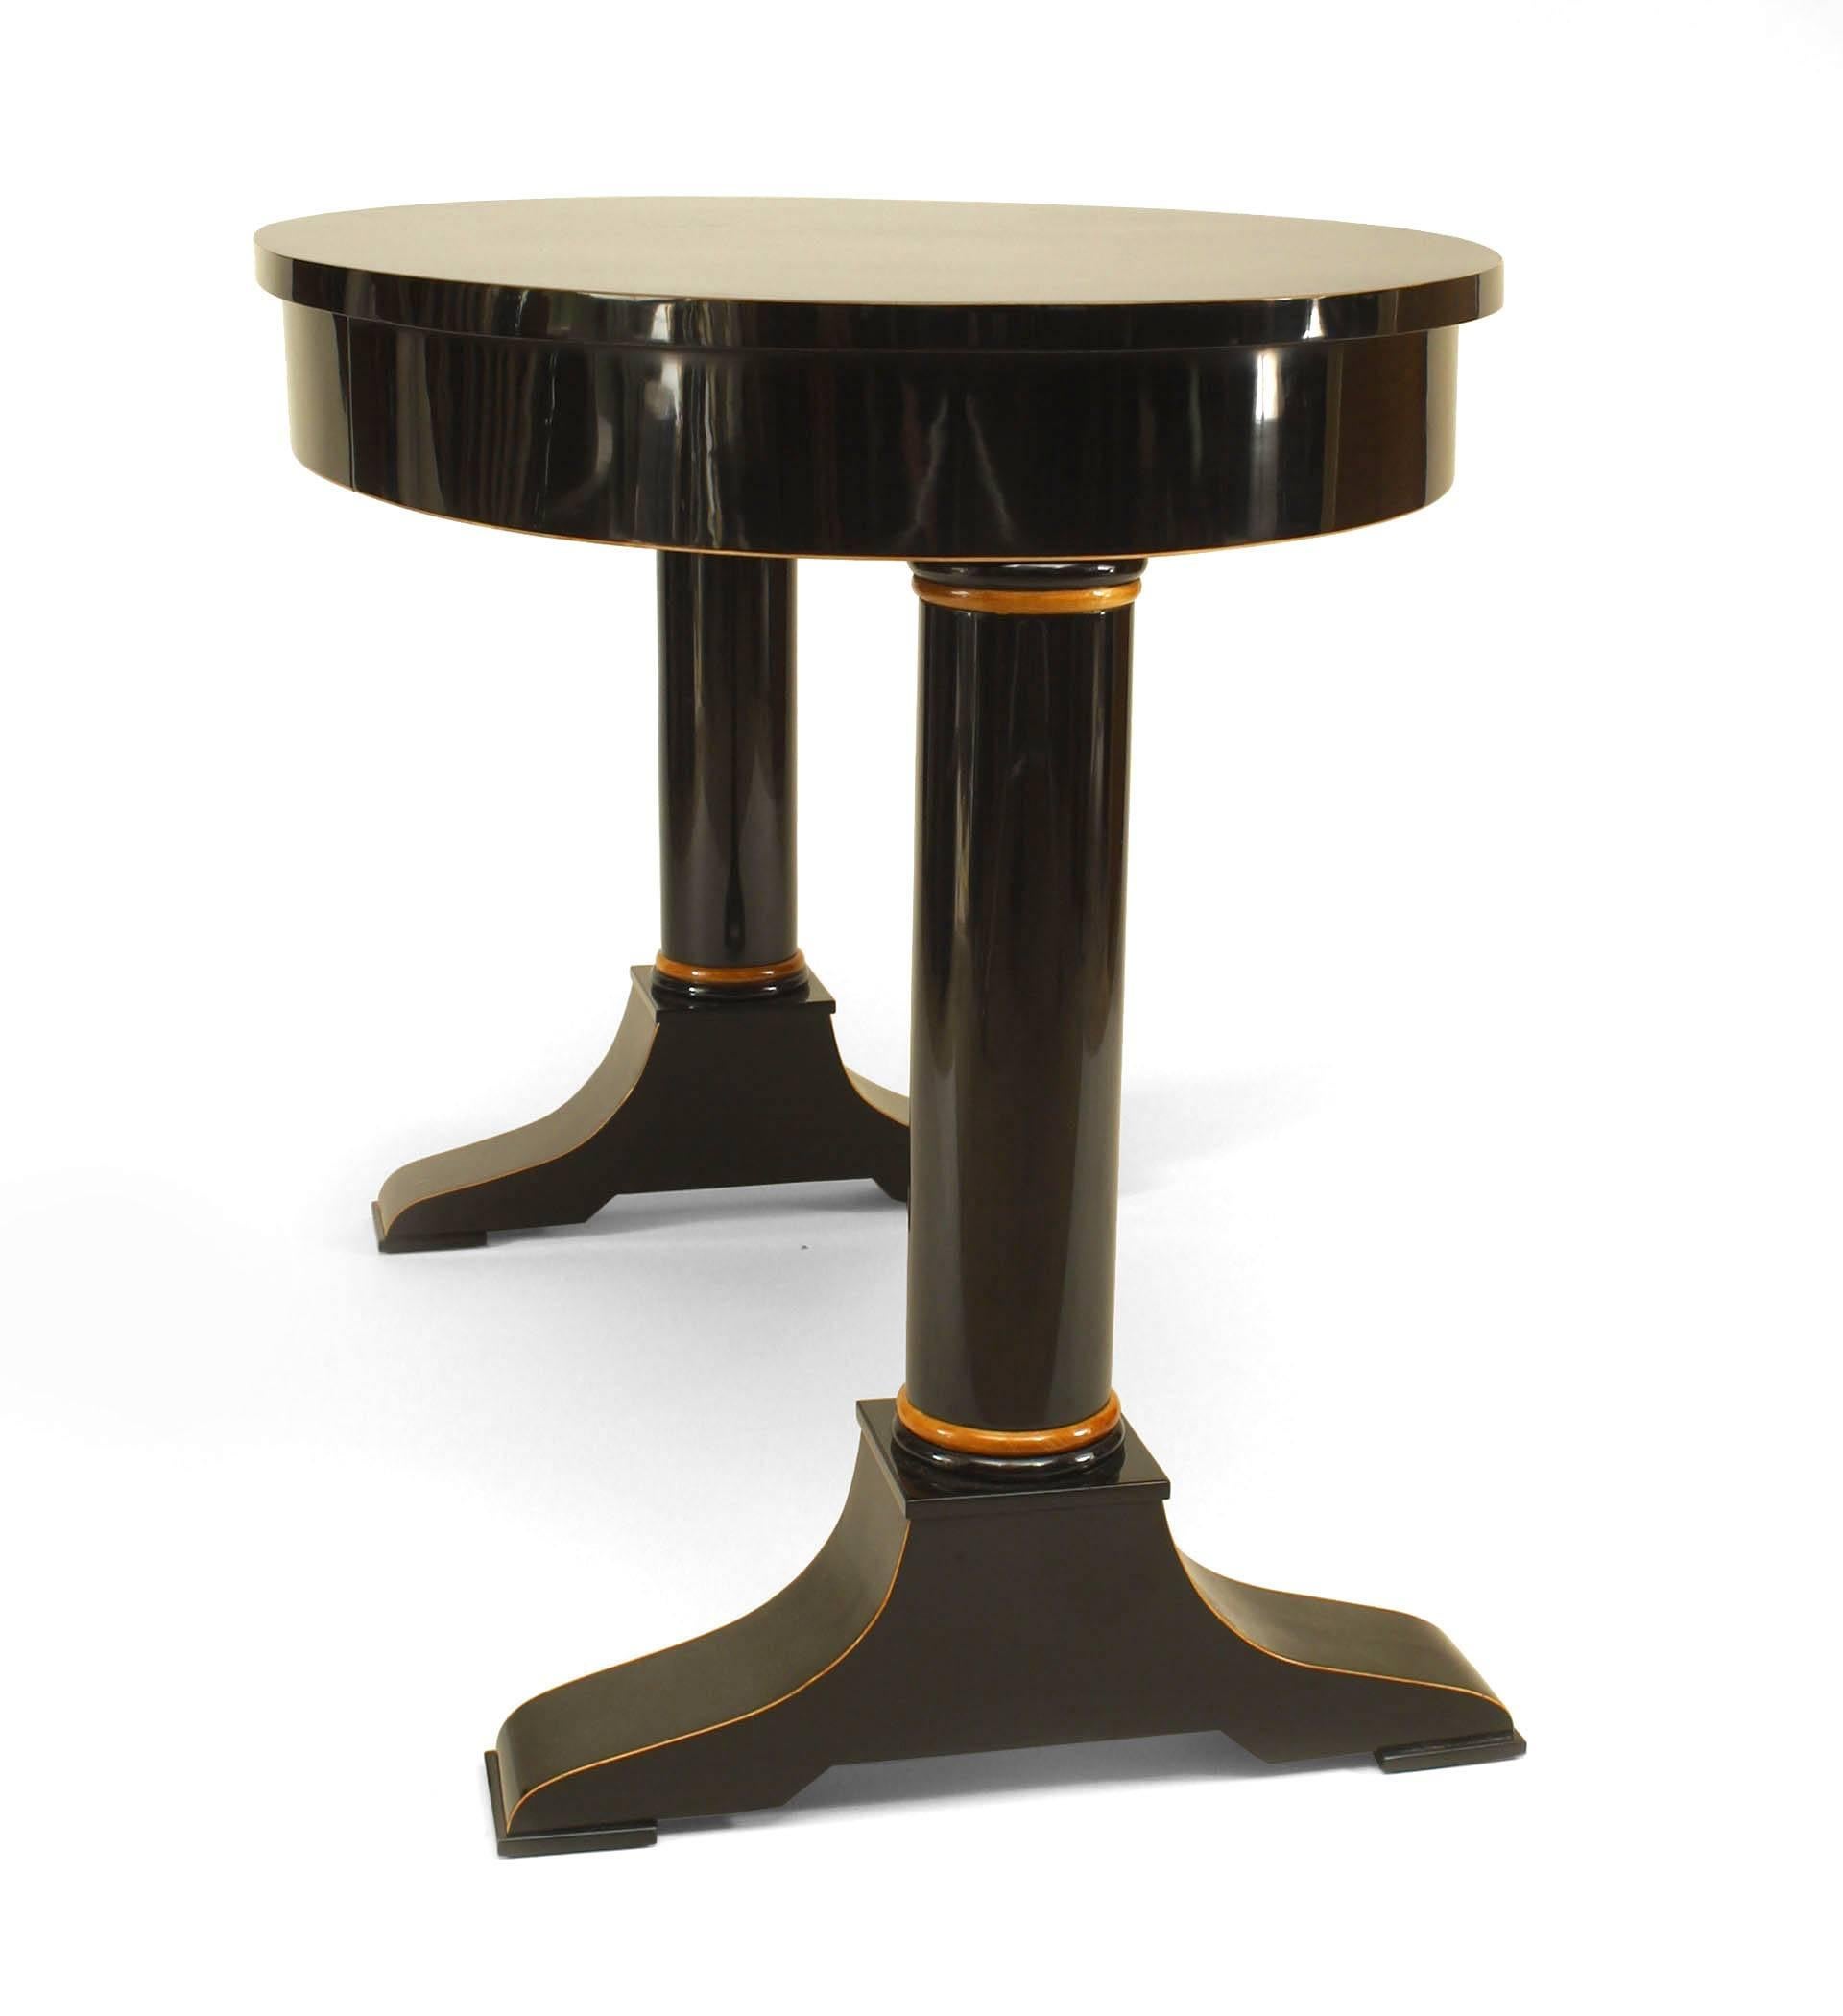 19th Century Austrian Biedermeier Ebonized Oval Table Desk For Sale